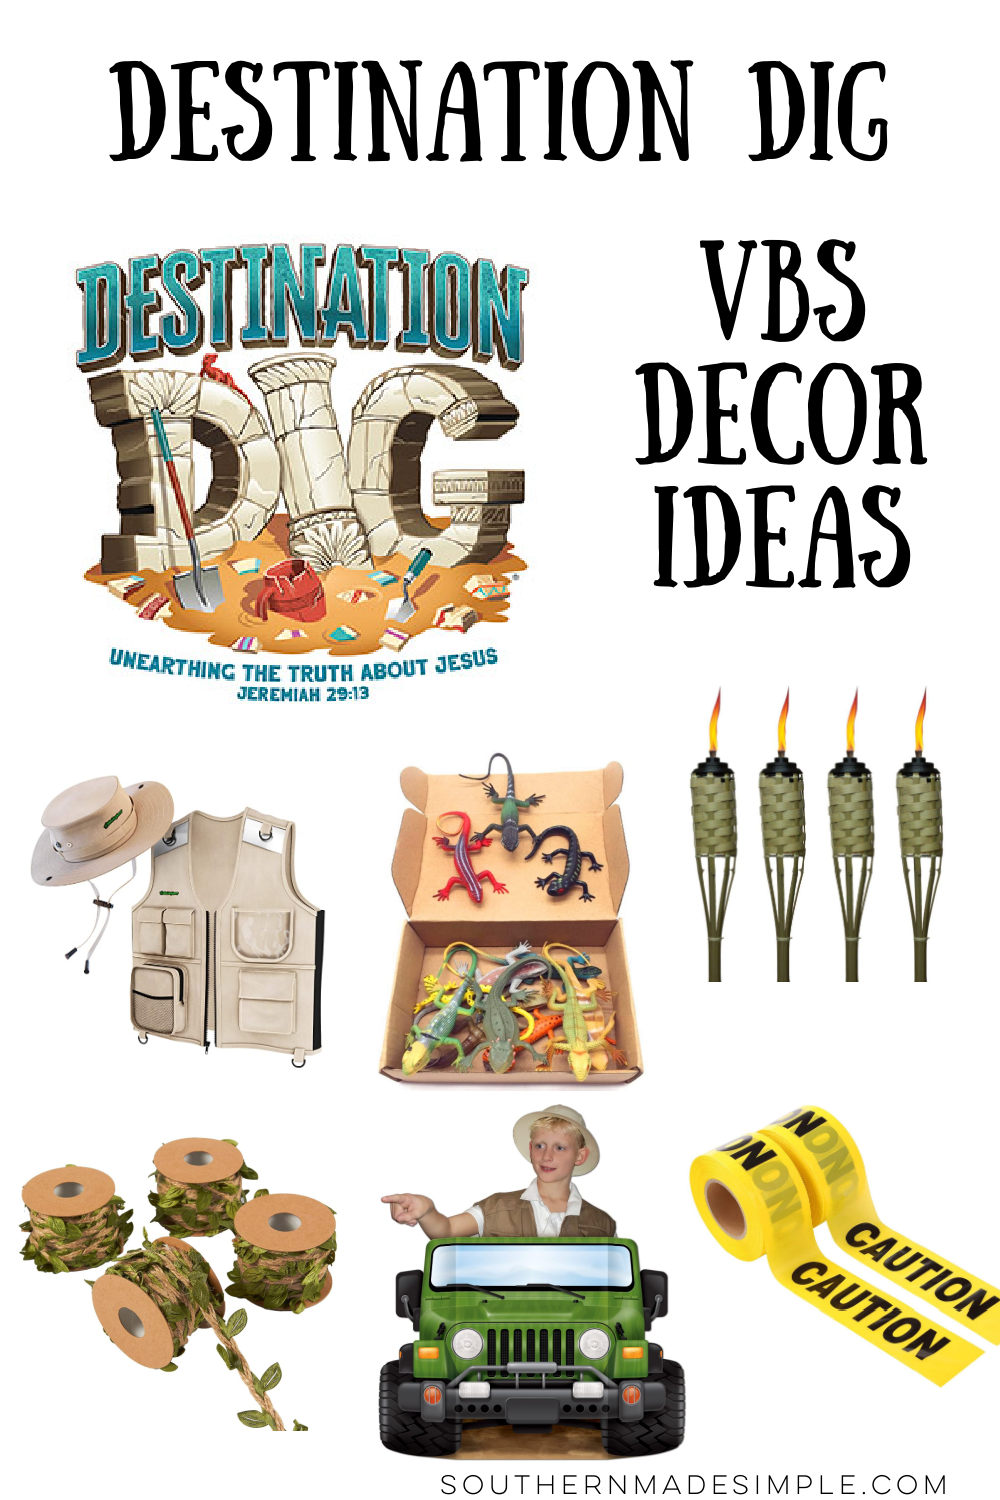 Destination Dig VBS Decor Ideas